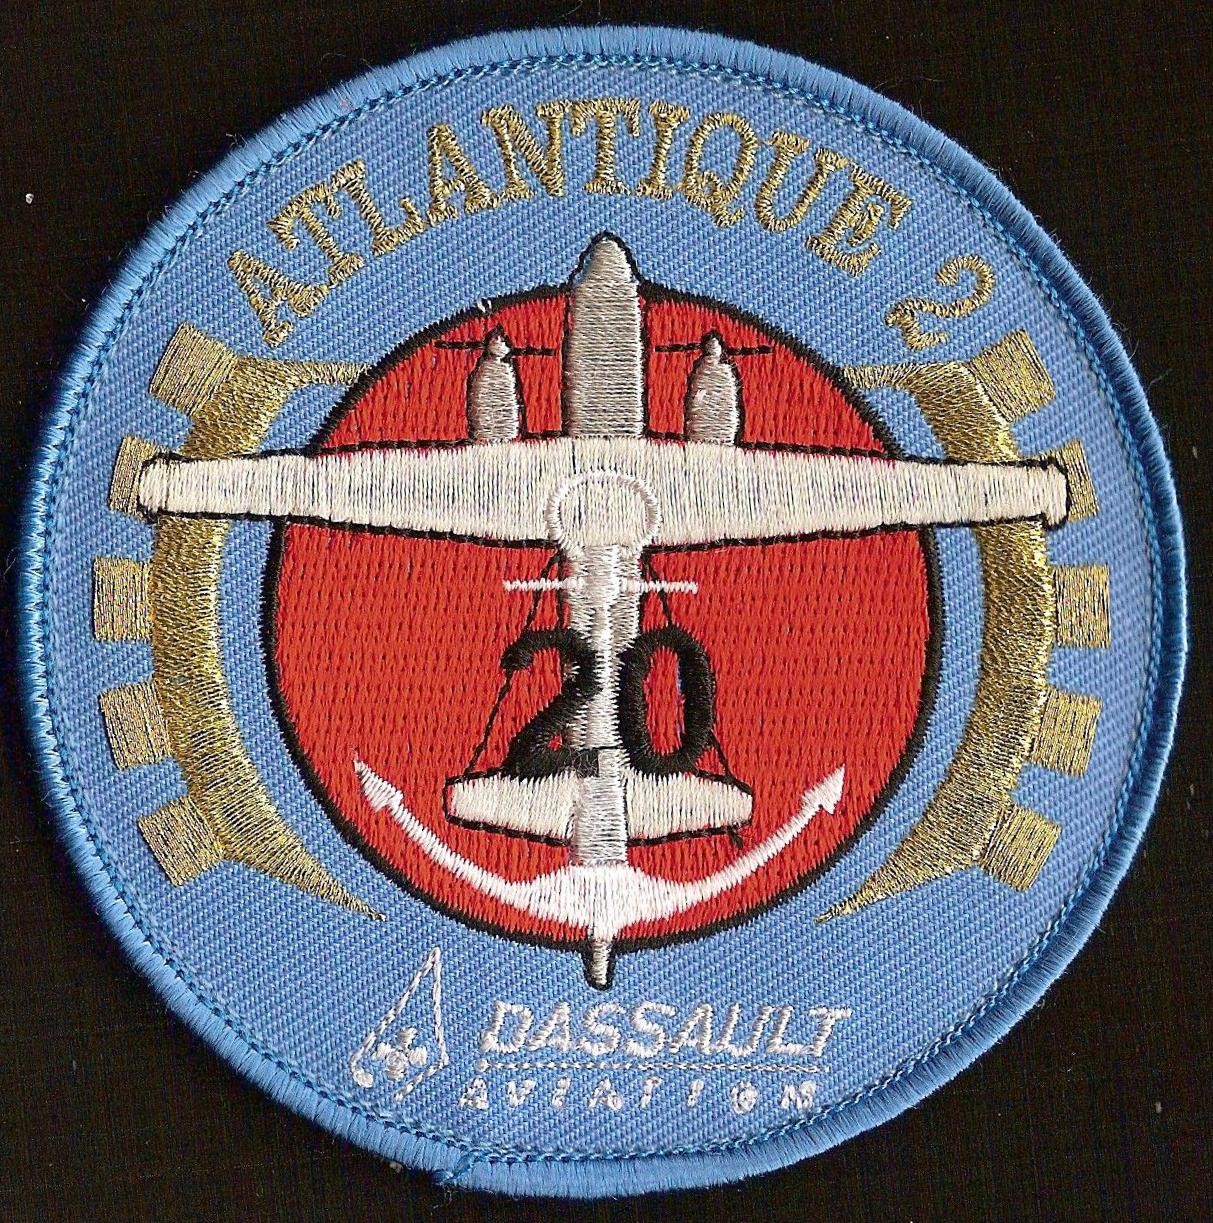 Dassault Aviation -  Atlantique 2 - mécanique  - 20 ans